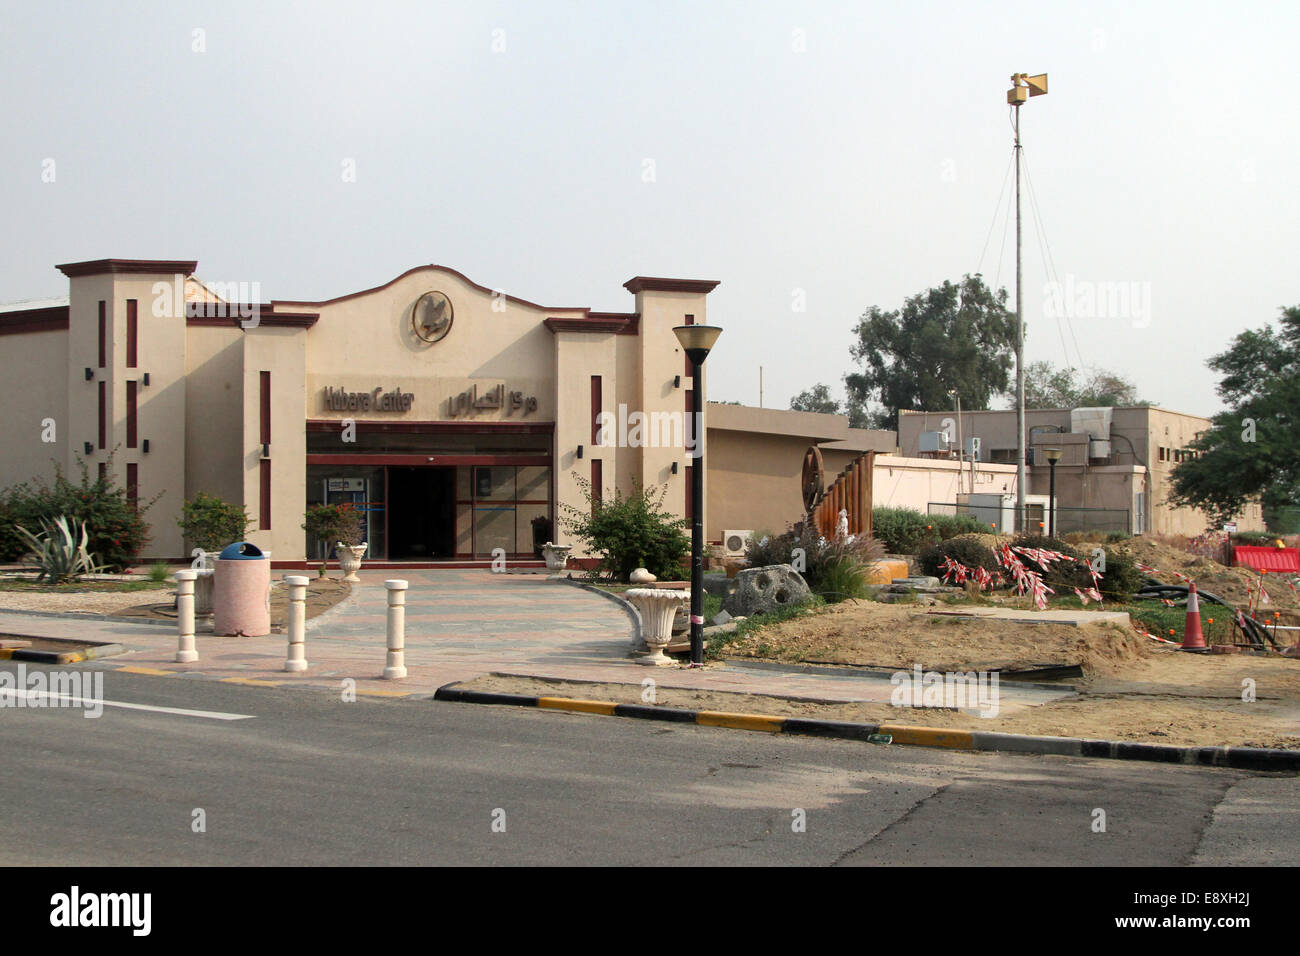 La Hubara Leisure Centre in Ahmadi, Kuwait Mercoledì 21 Novembre 2012 Foto Stock